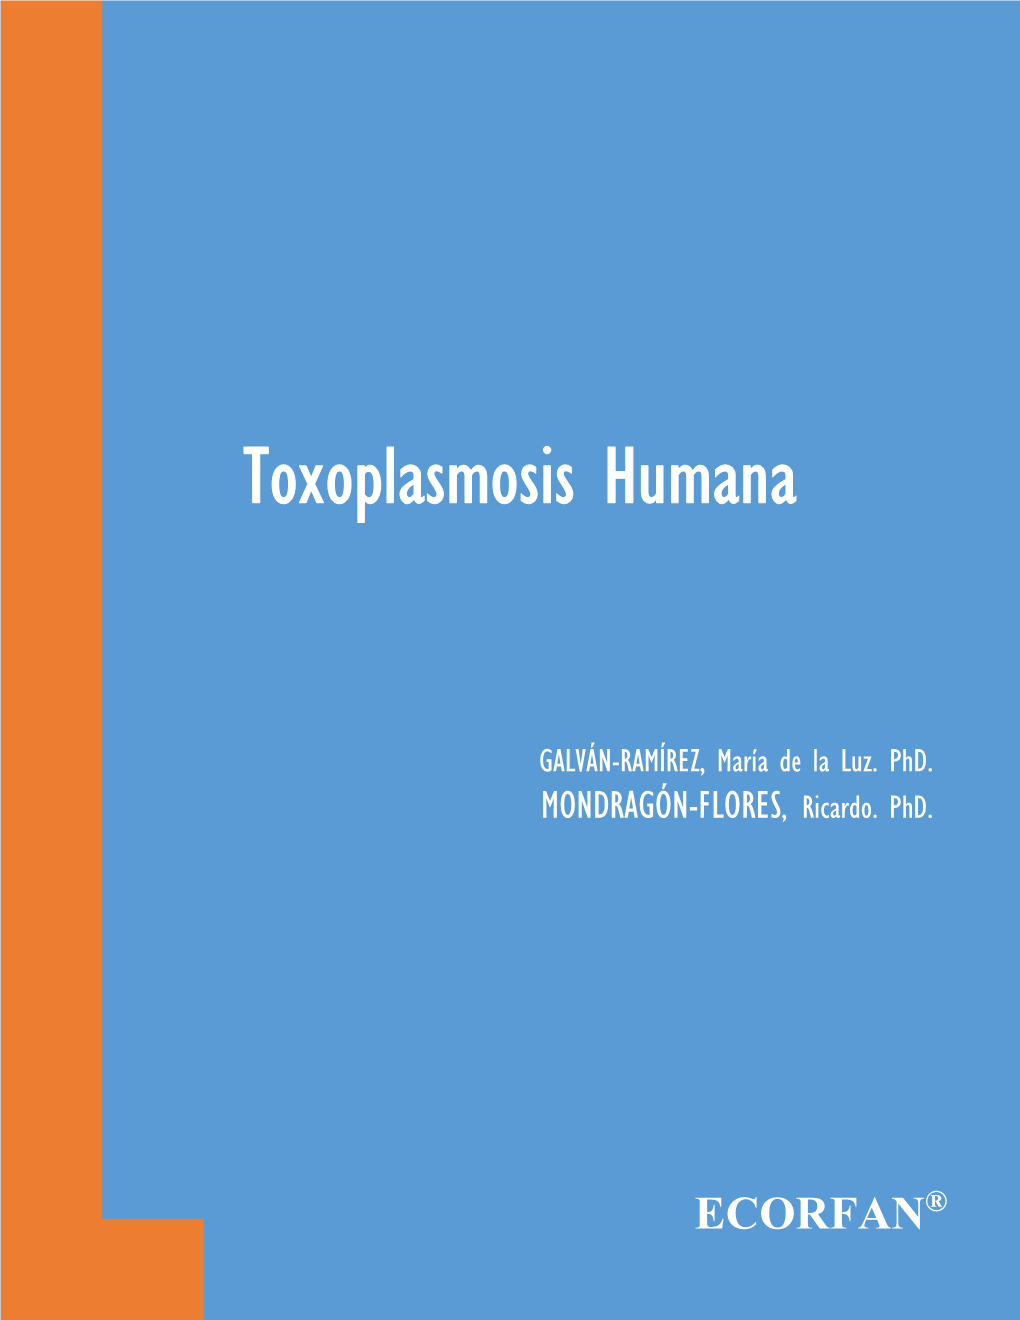 Toxoplasmosis Humana